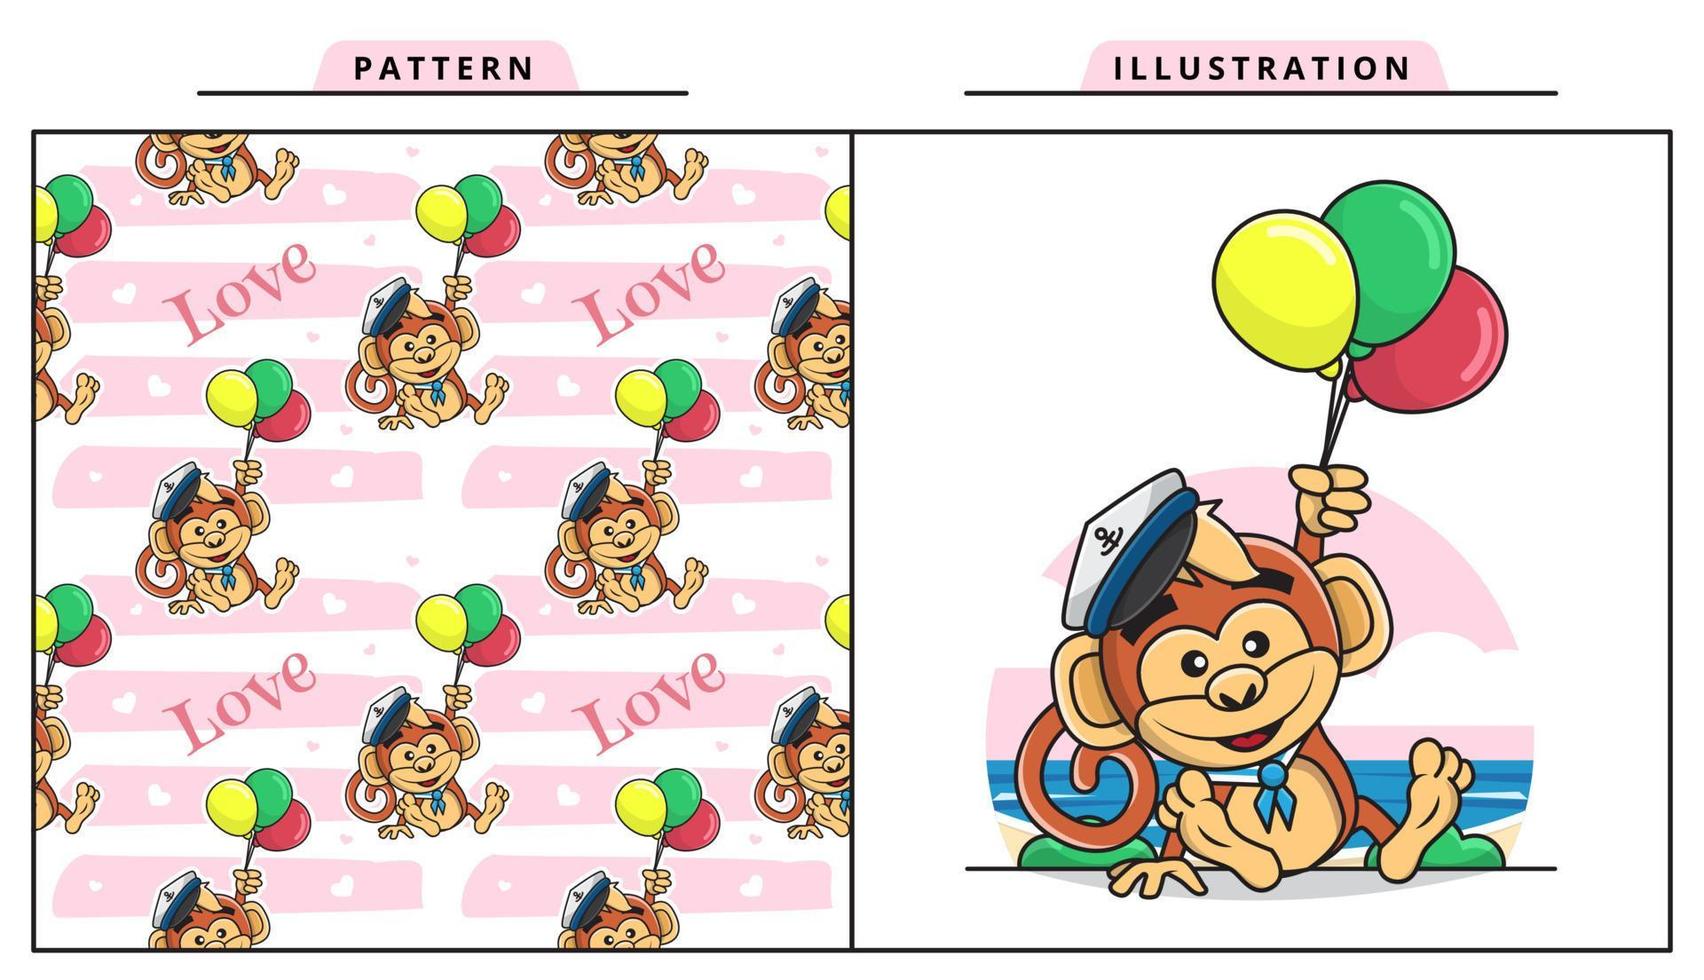 Illustrationsvektorgrafik des netten Affen, der Seemannskostüm trägt und Ballon mit dekorativem nahtlosem Muster hält vektor